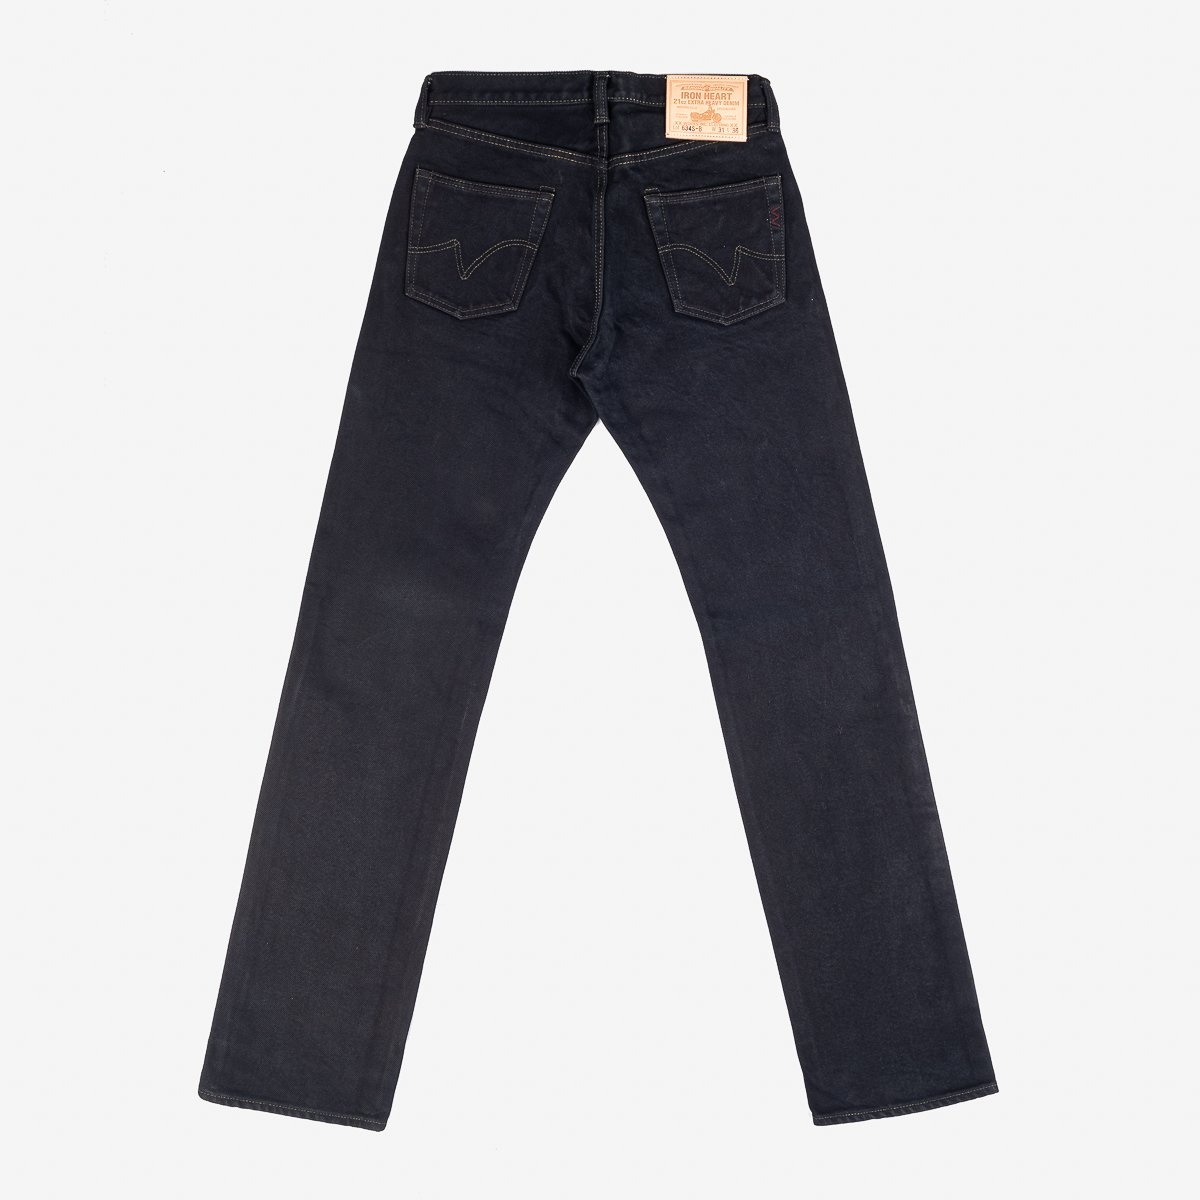 IH-634S-B 21oz Selvedge Denim Straight Cut Jeans - Indigo Overdyed Black - 5